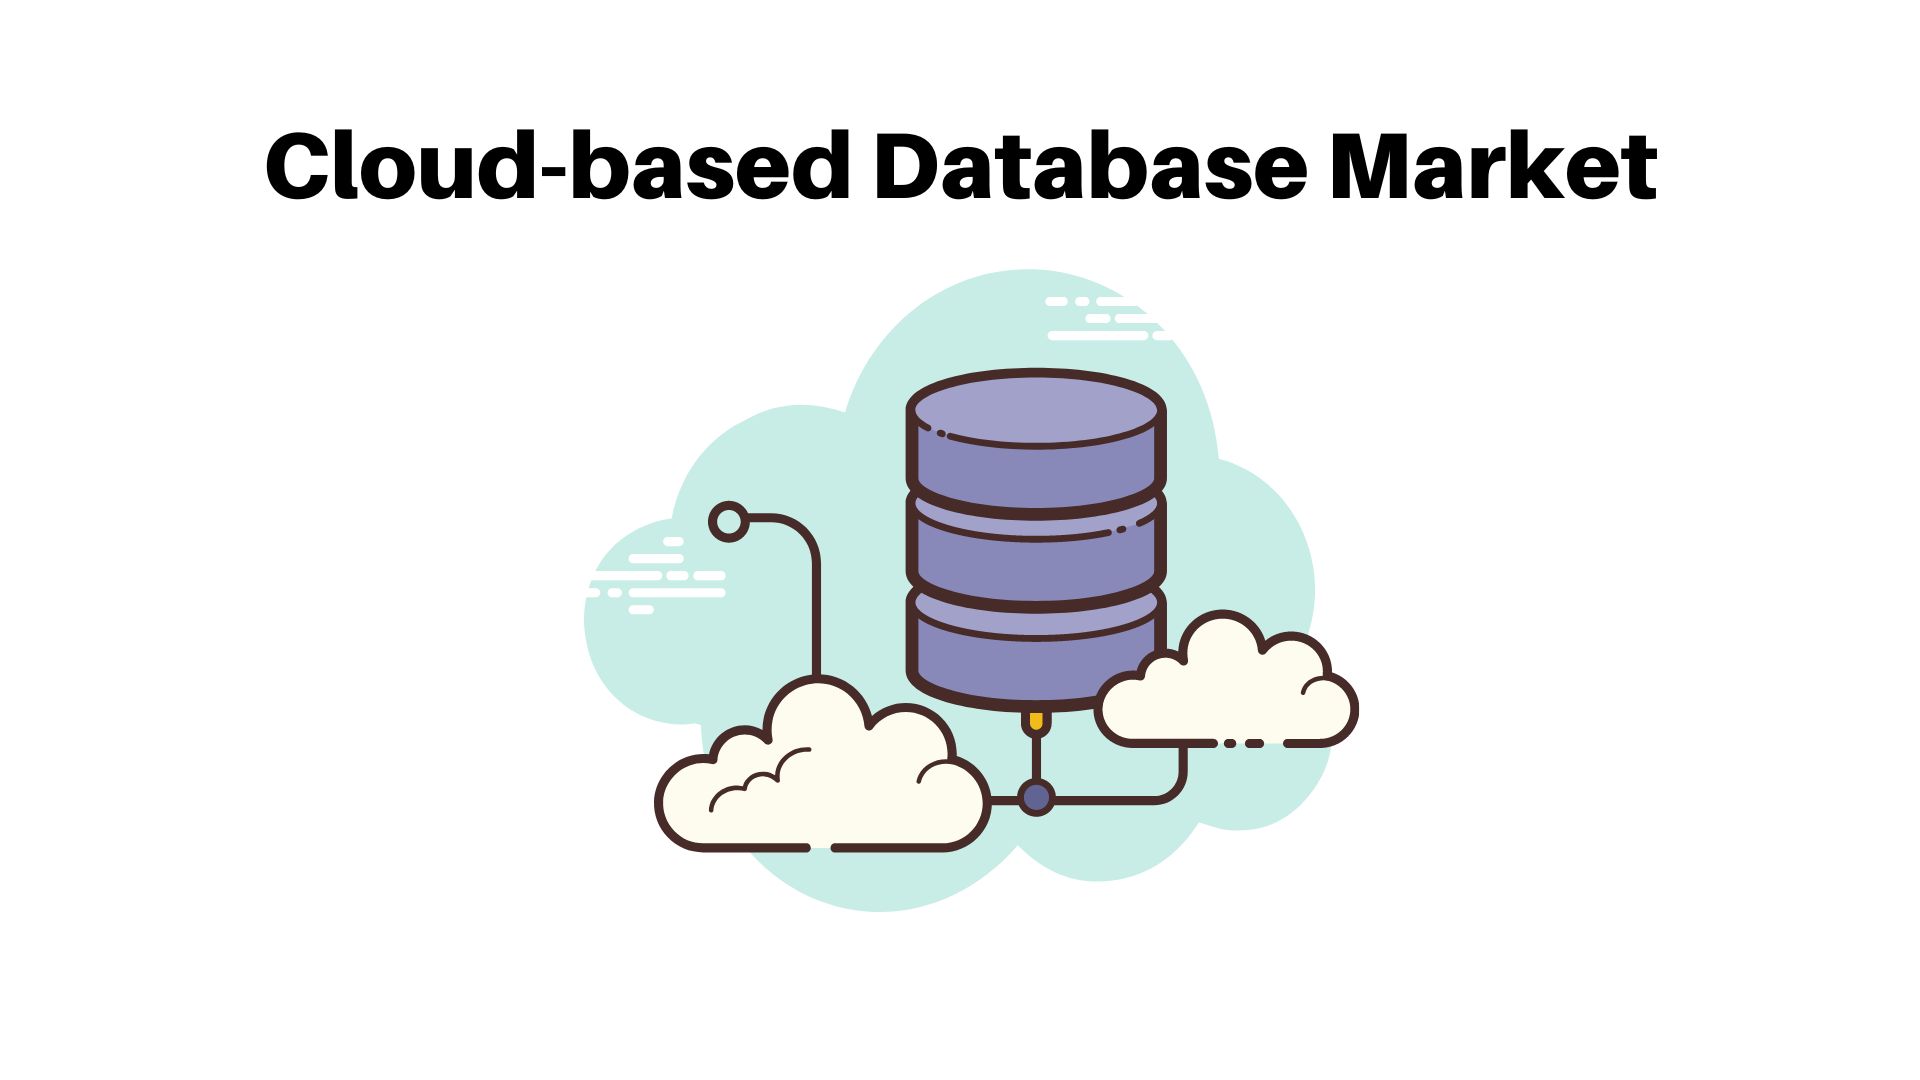 Cloud-based Database Market estimated to be worth USD 14.82 Billion by 2032